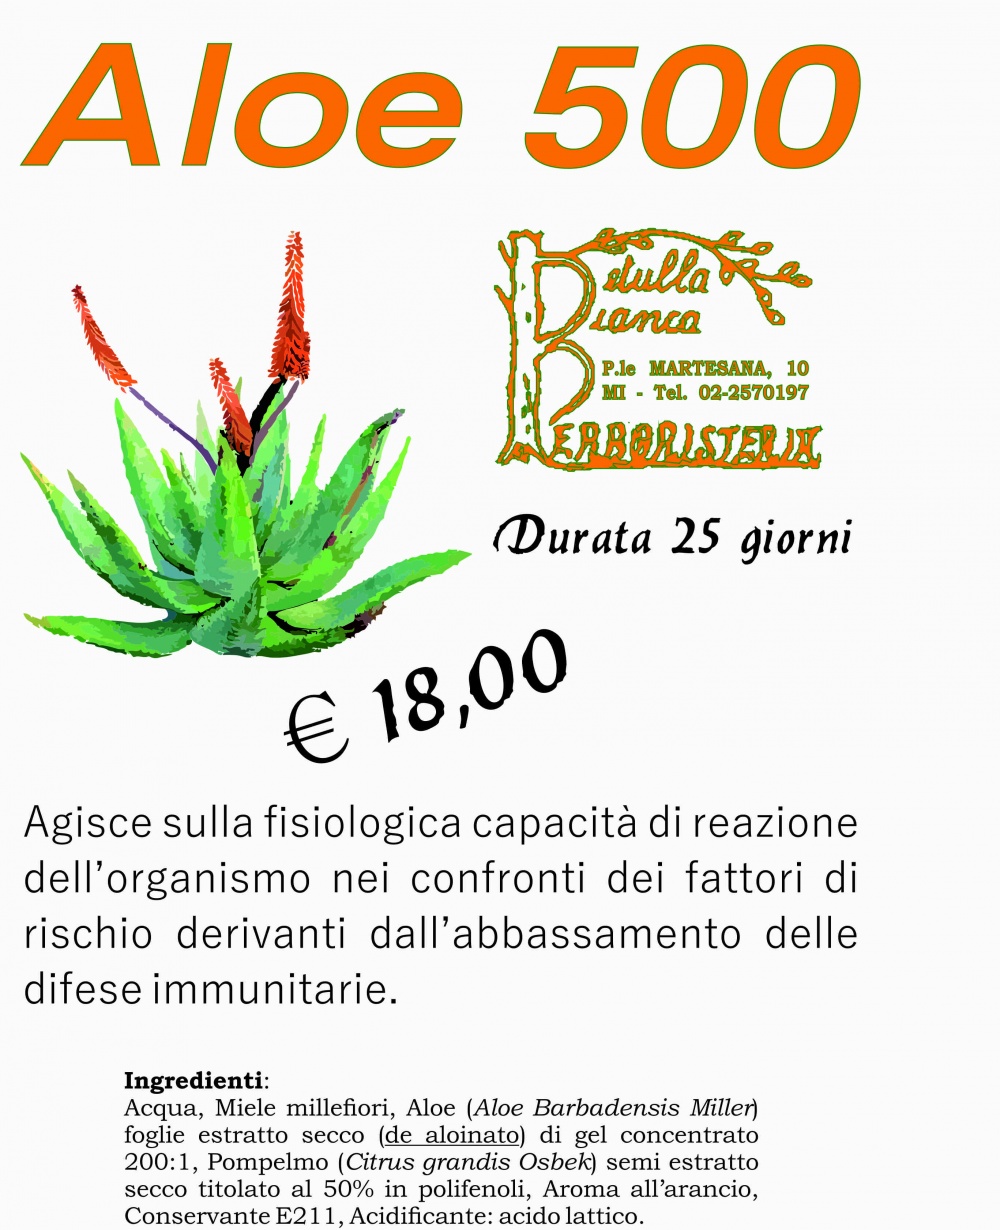 Aloe 500 cartello